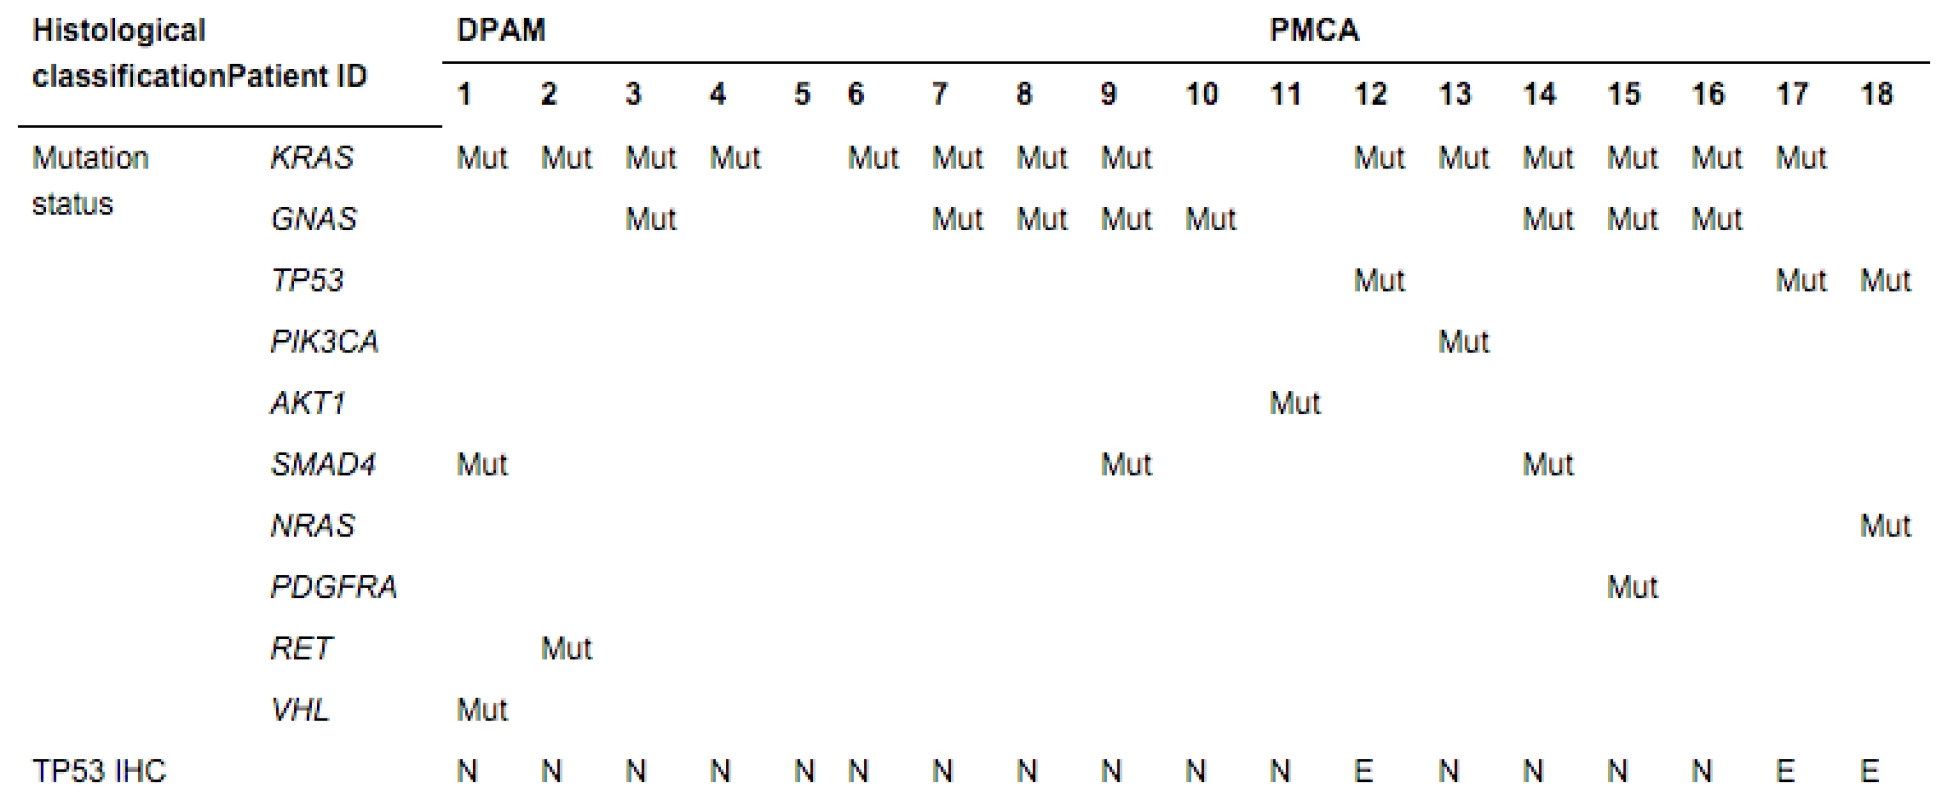 Mutation status and IHC of TP53